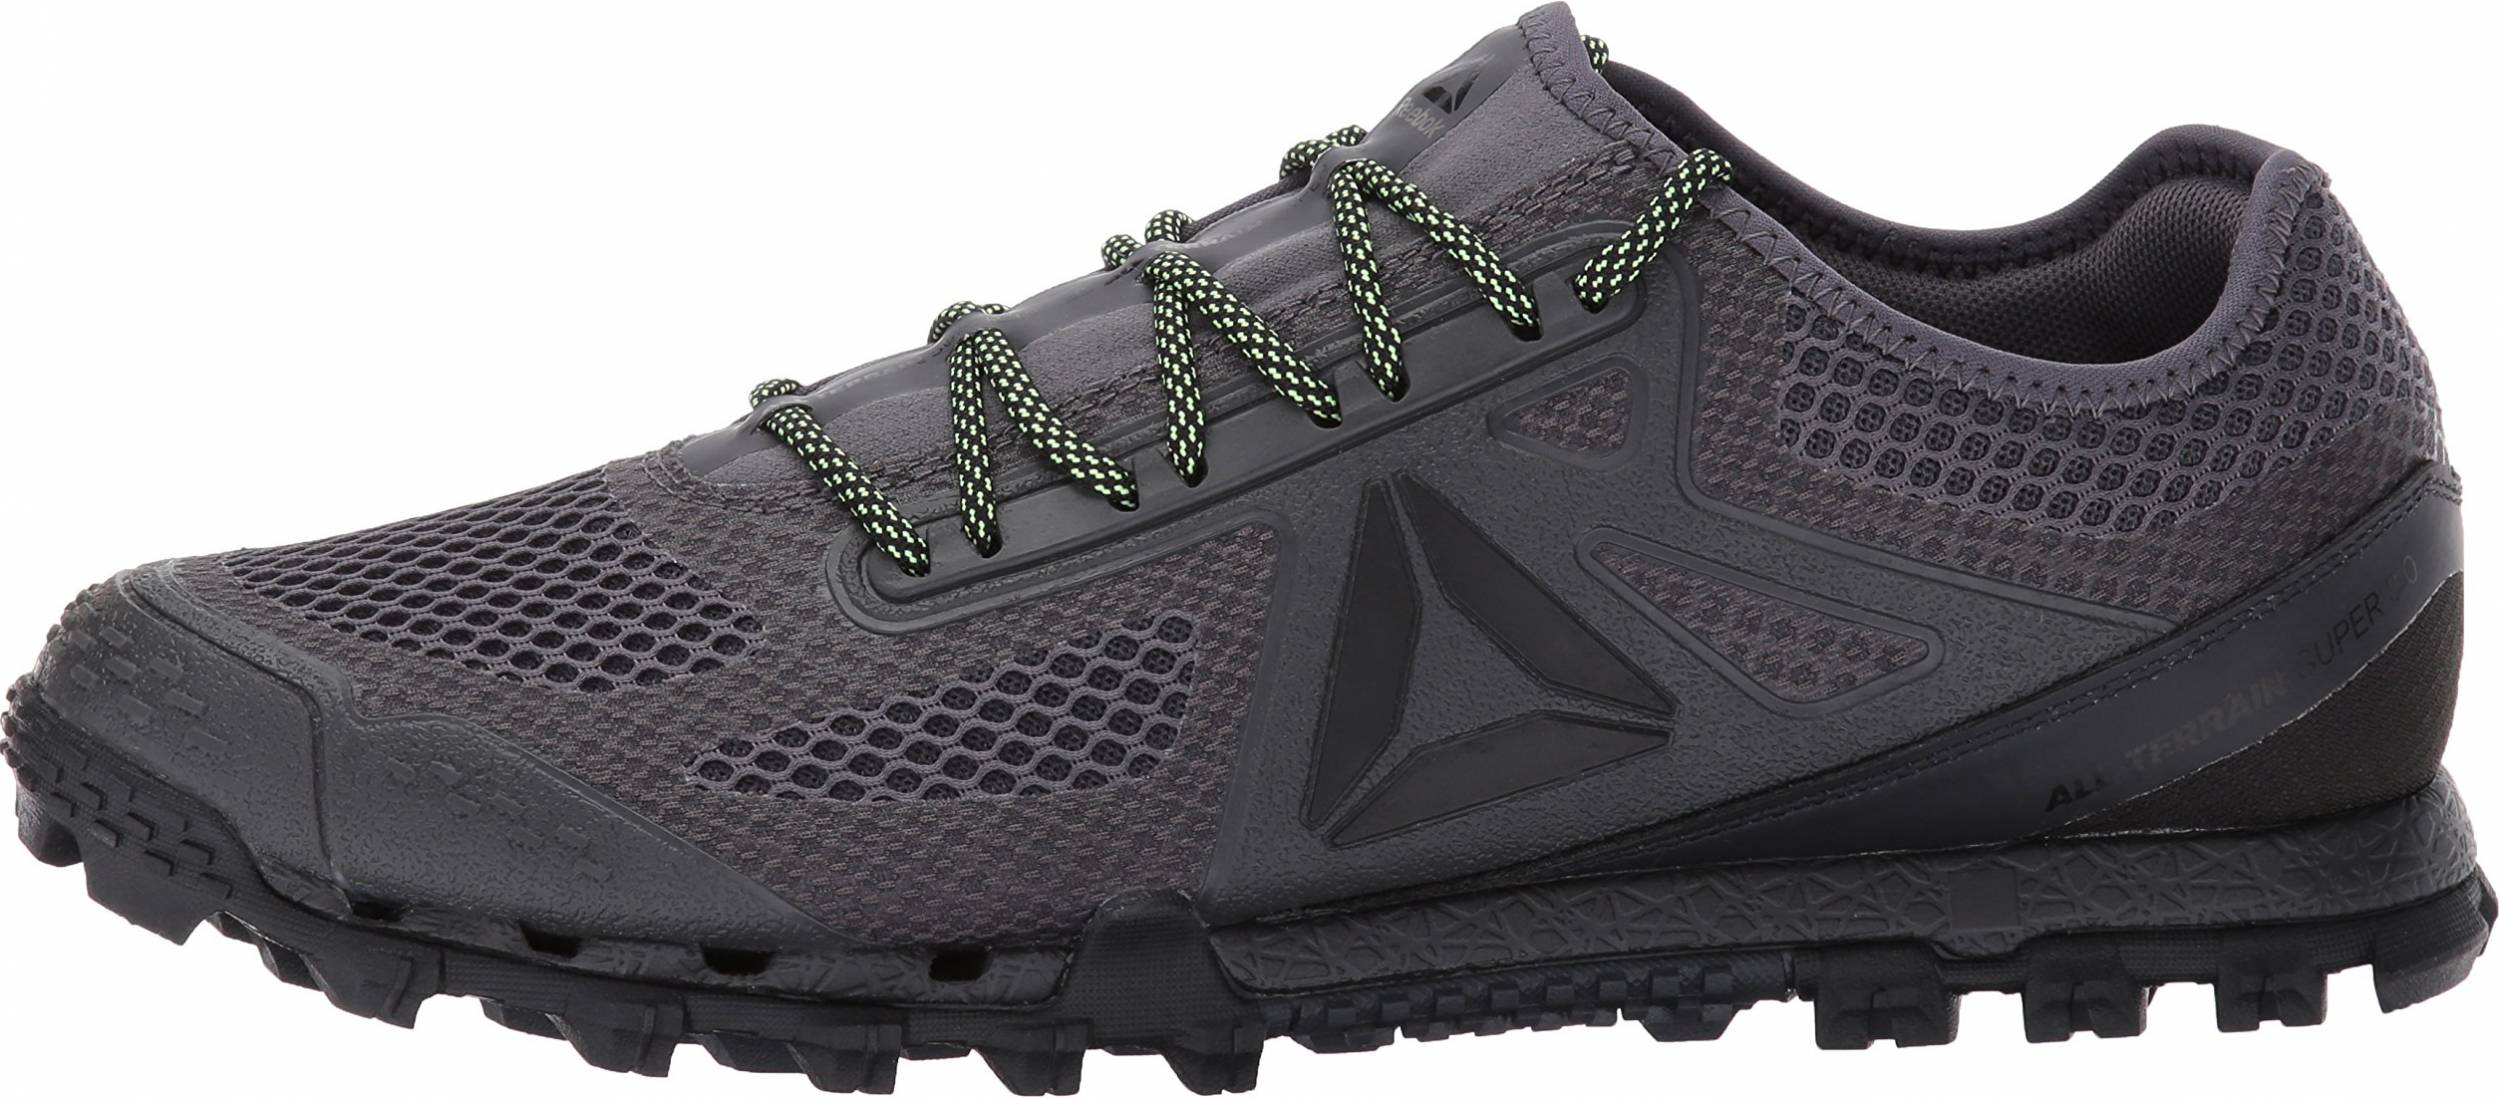 reebok men's trail running shoes